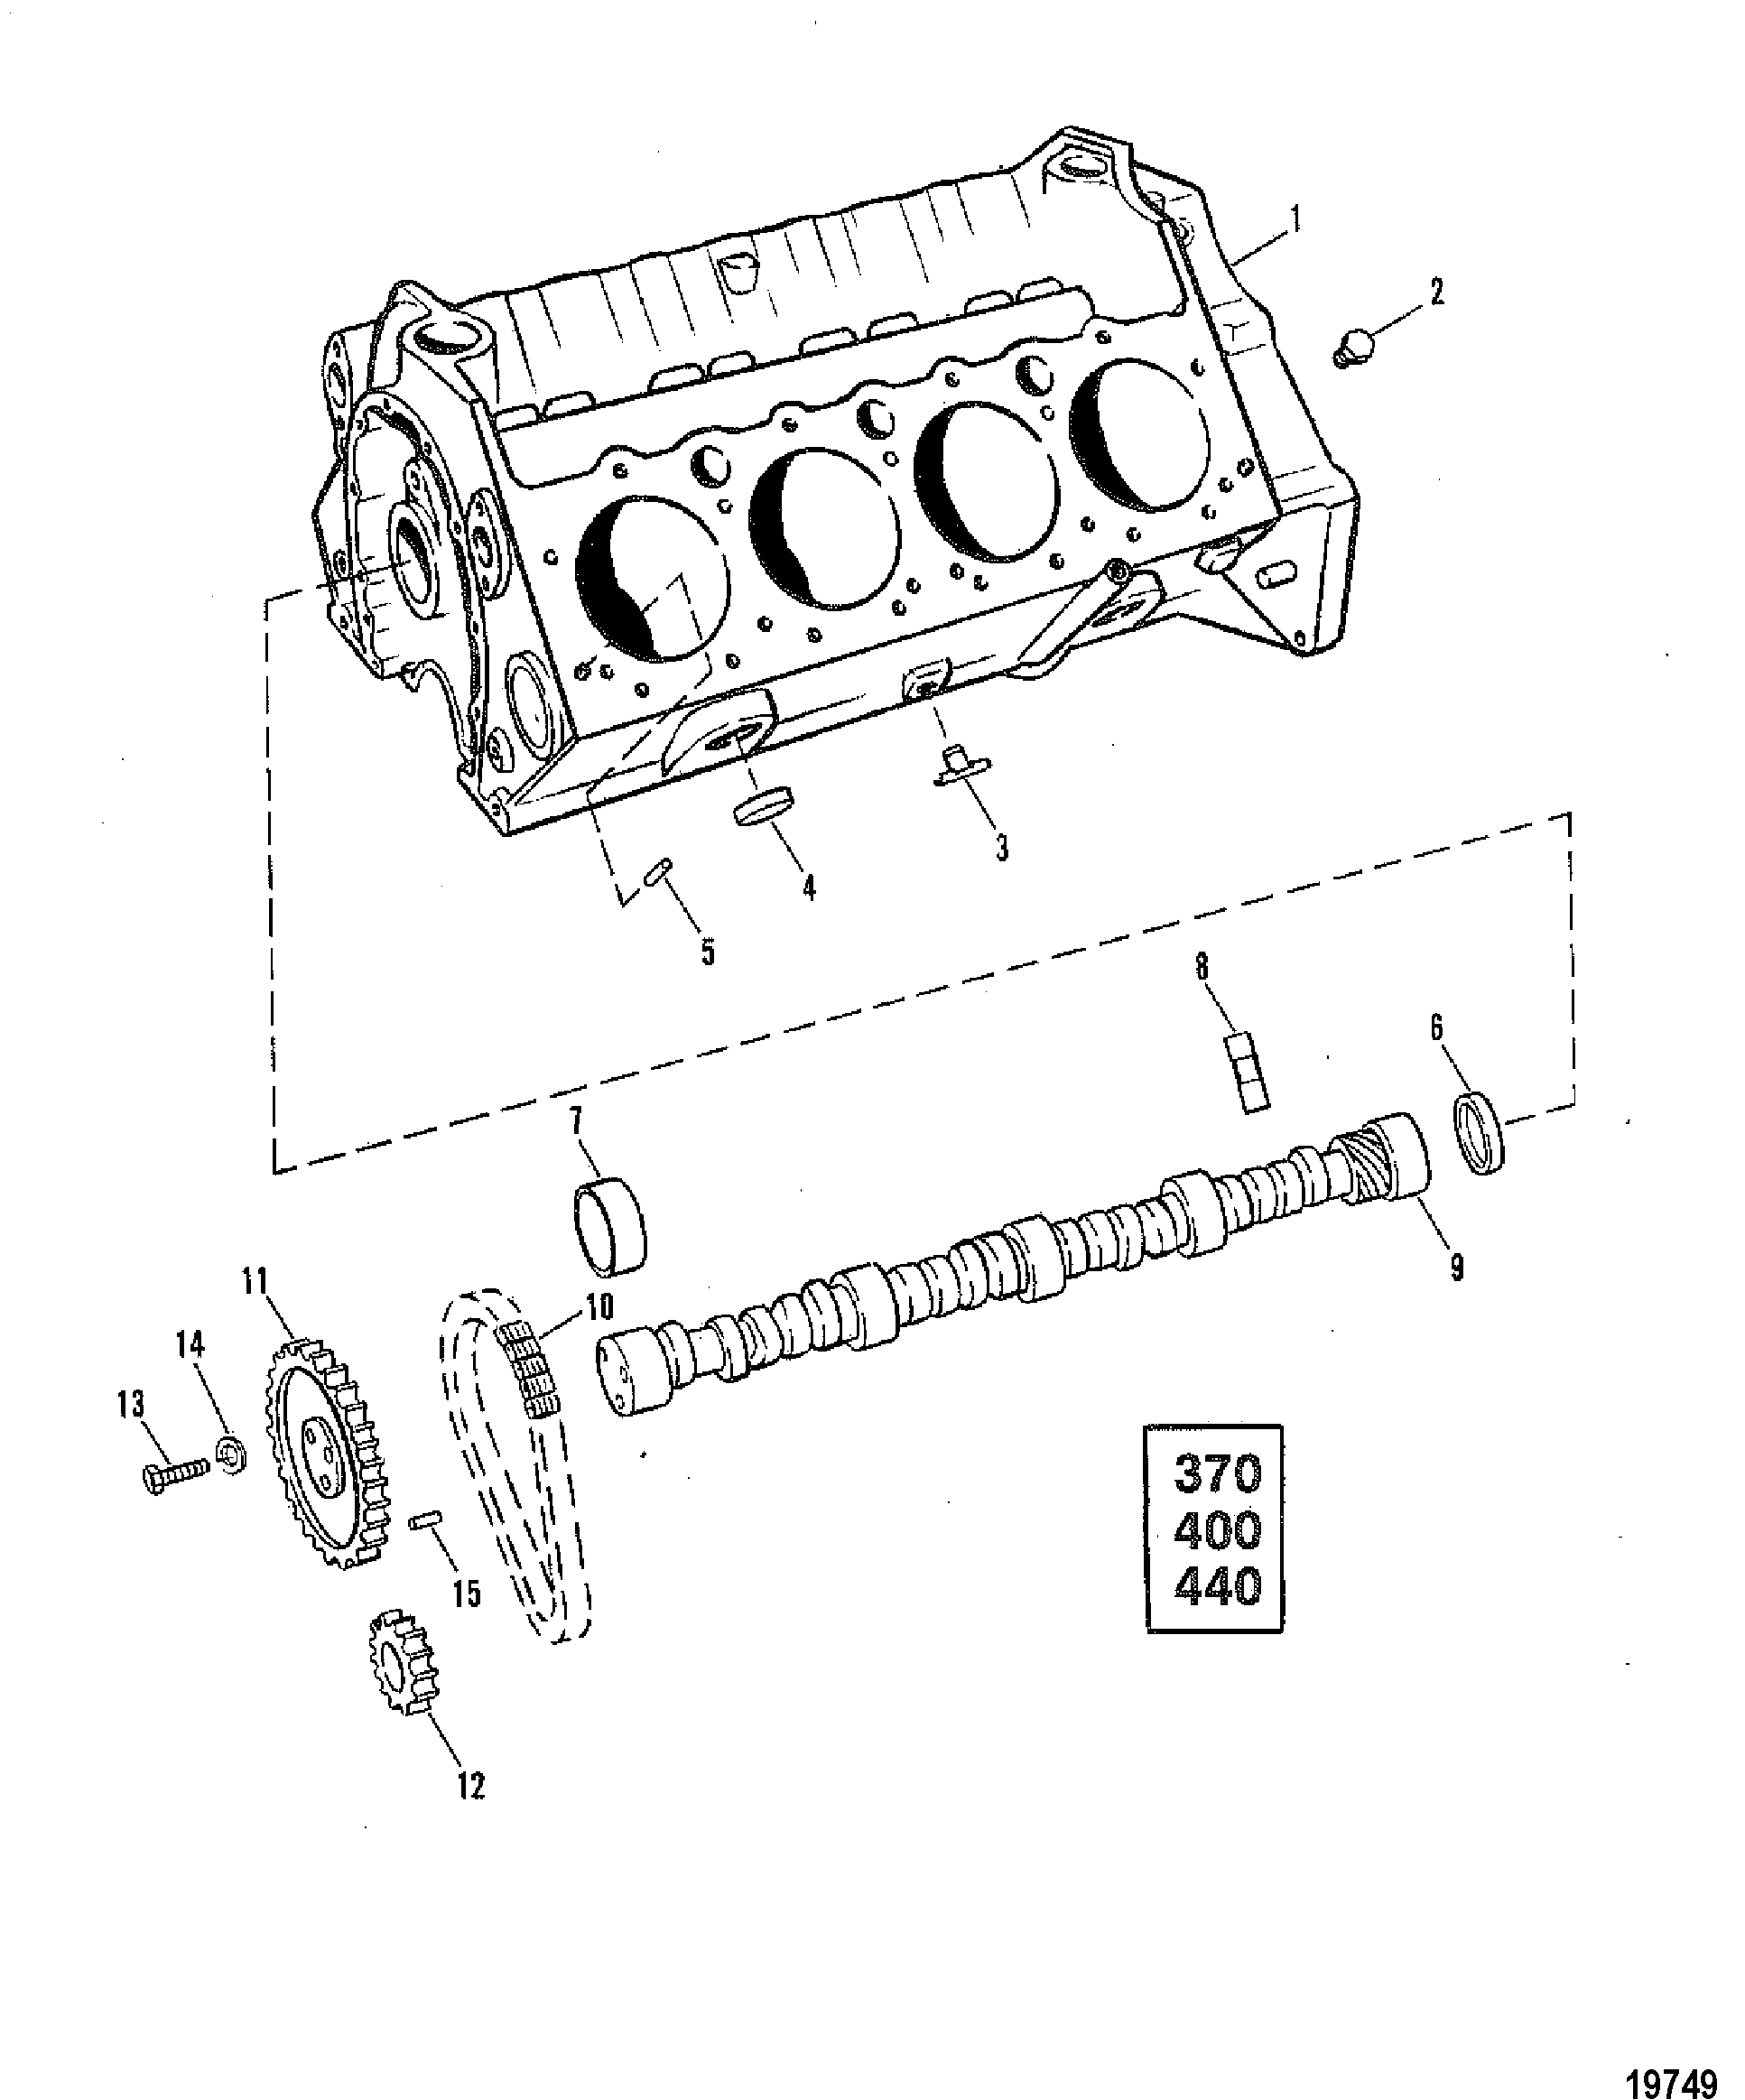 Cylinder Block and Camshaft(370/400/440)